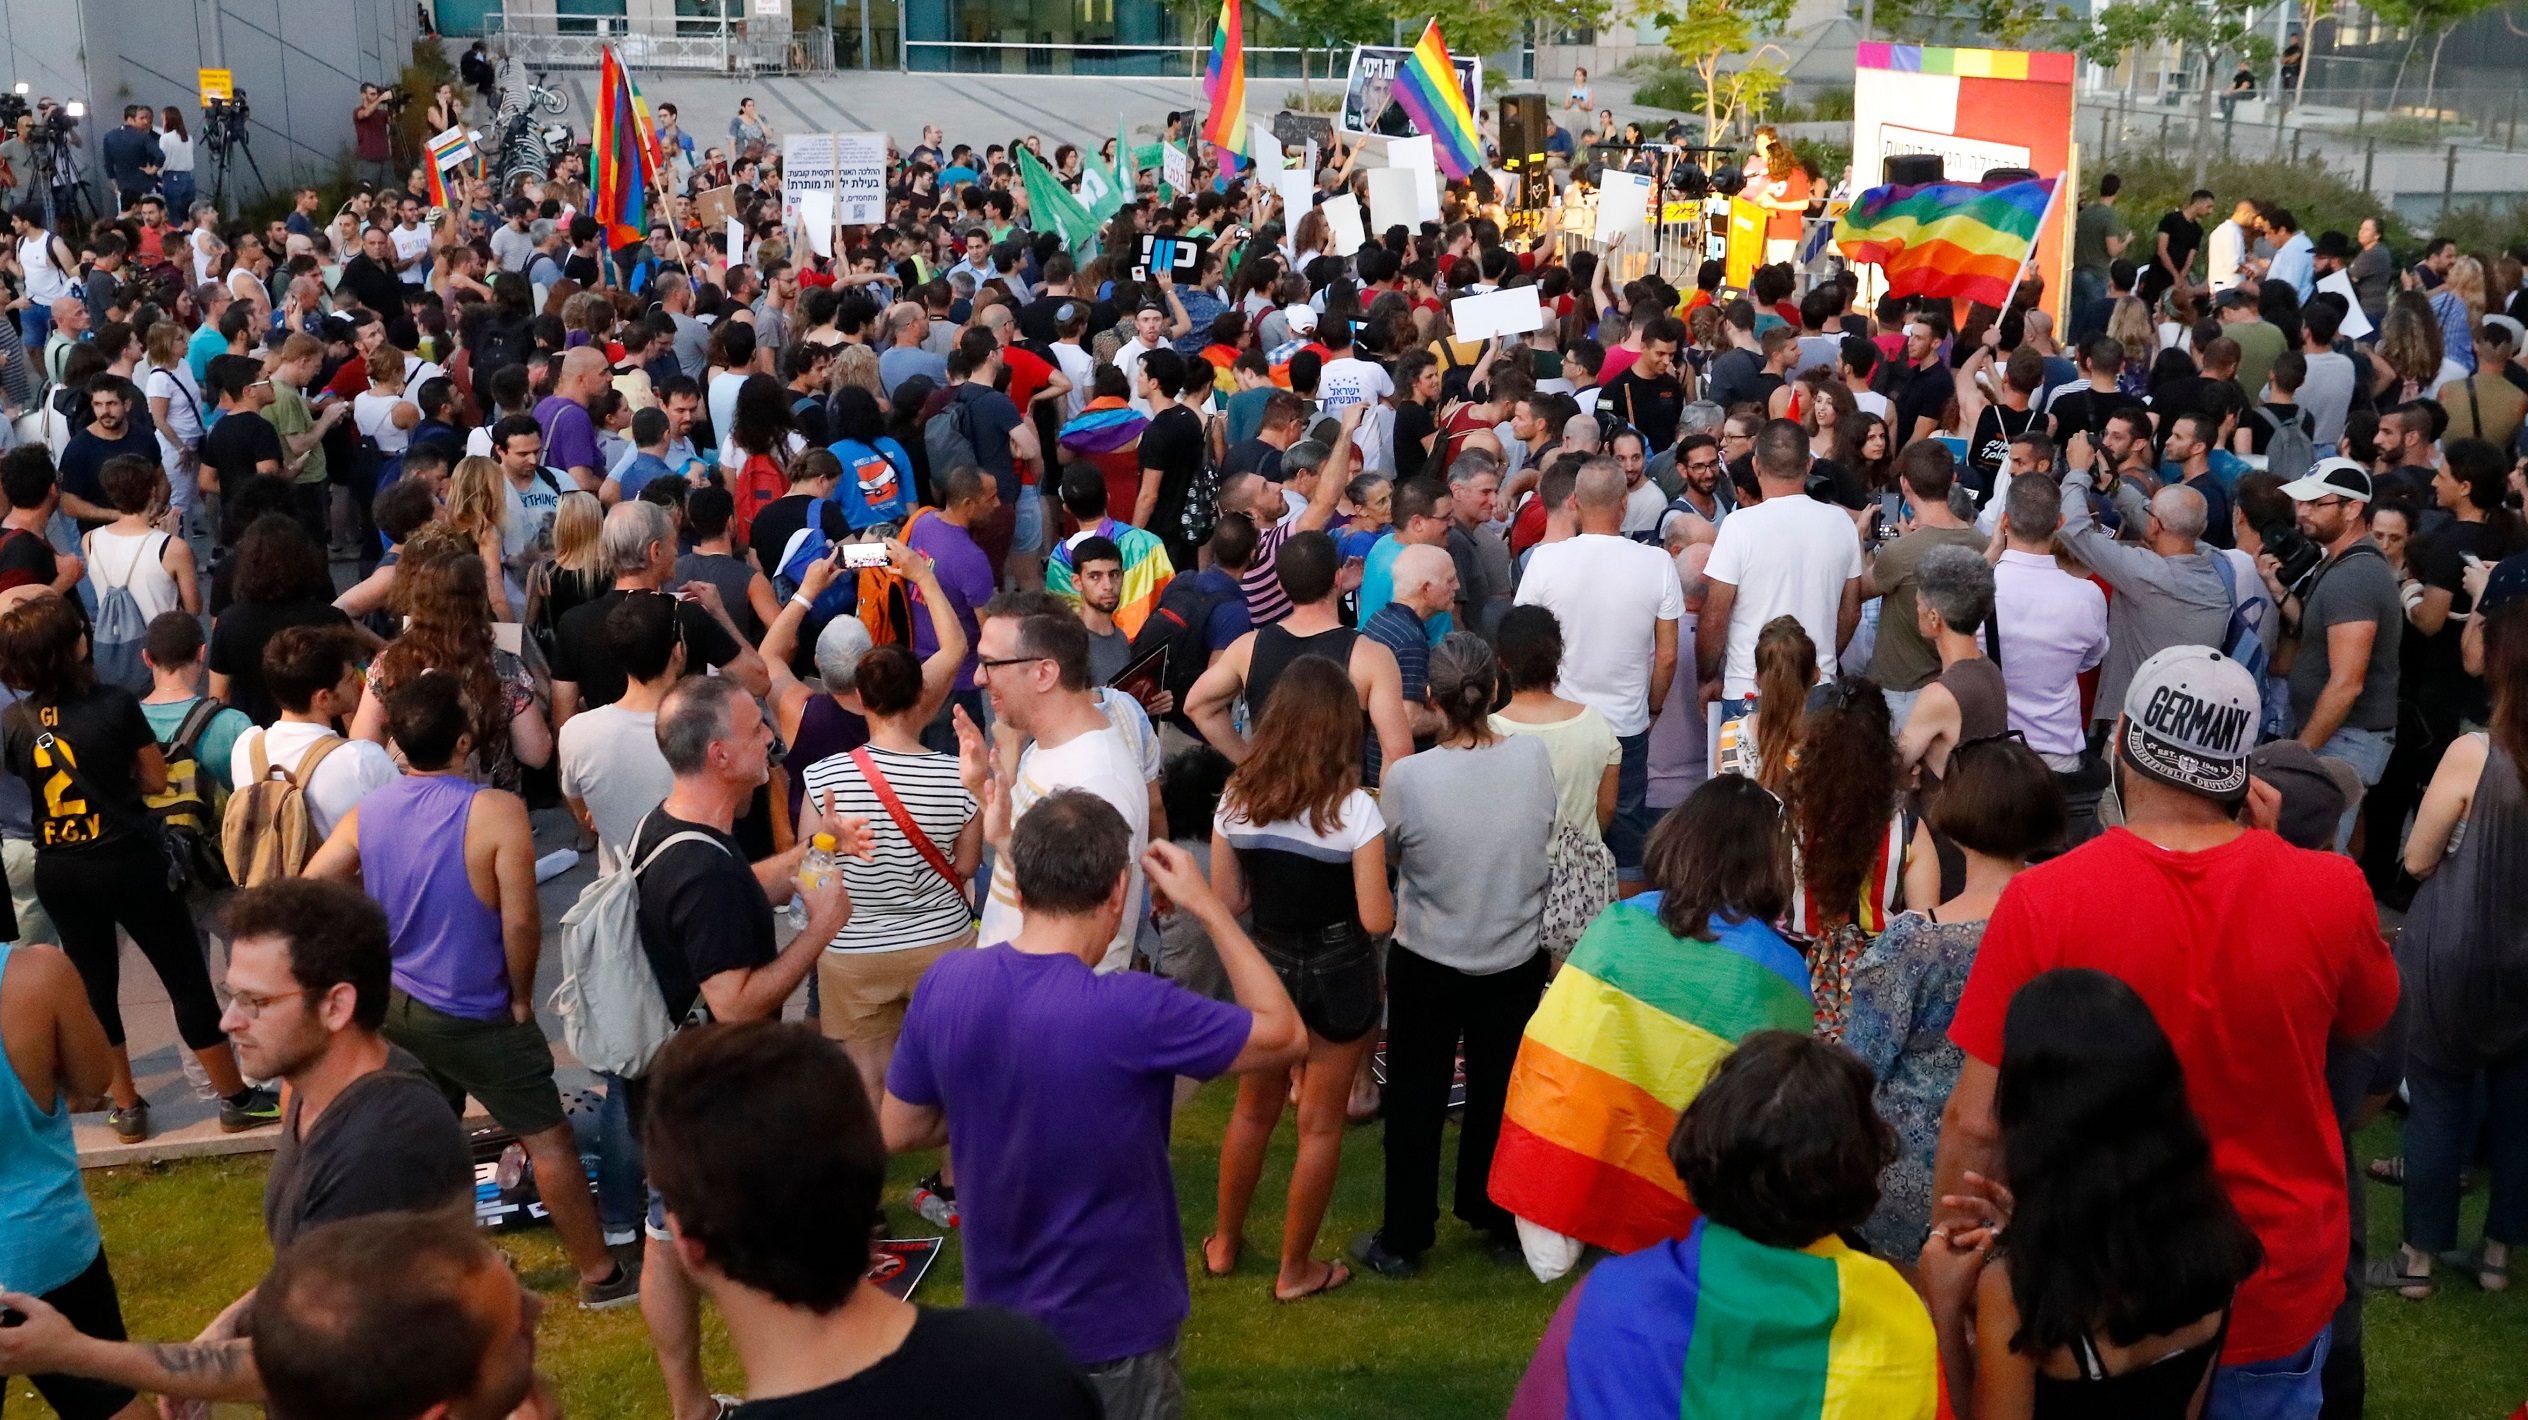 Israel: State Stops Unsafe, Pseudoscientific Scheme To ‘Straighten’ Sexuality